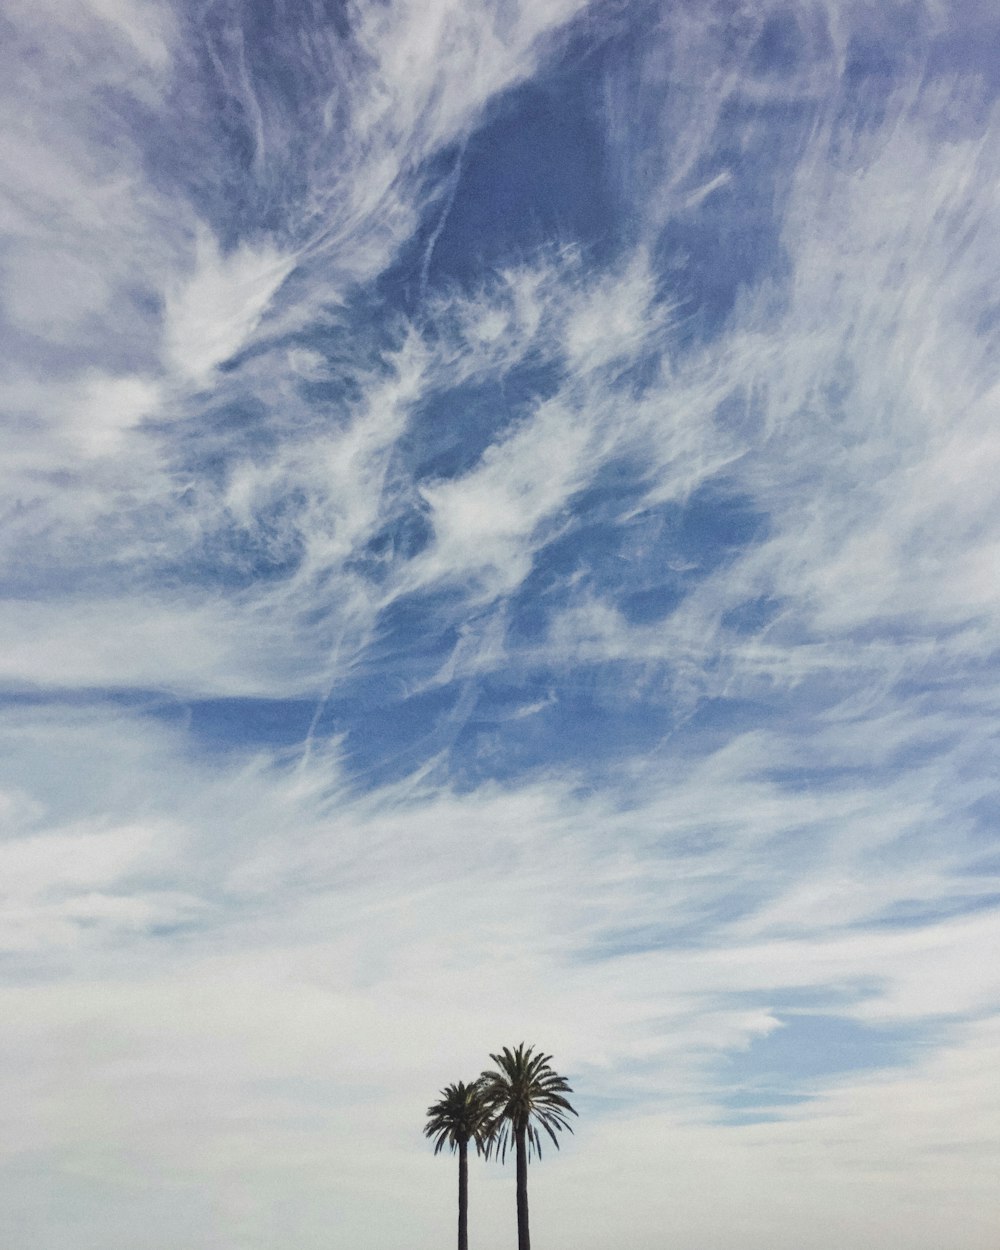 palm tree under white clouds